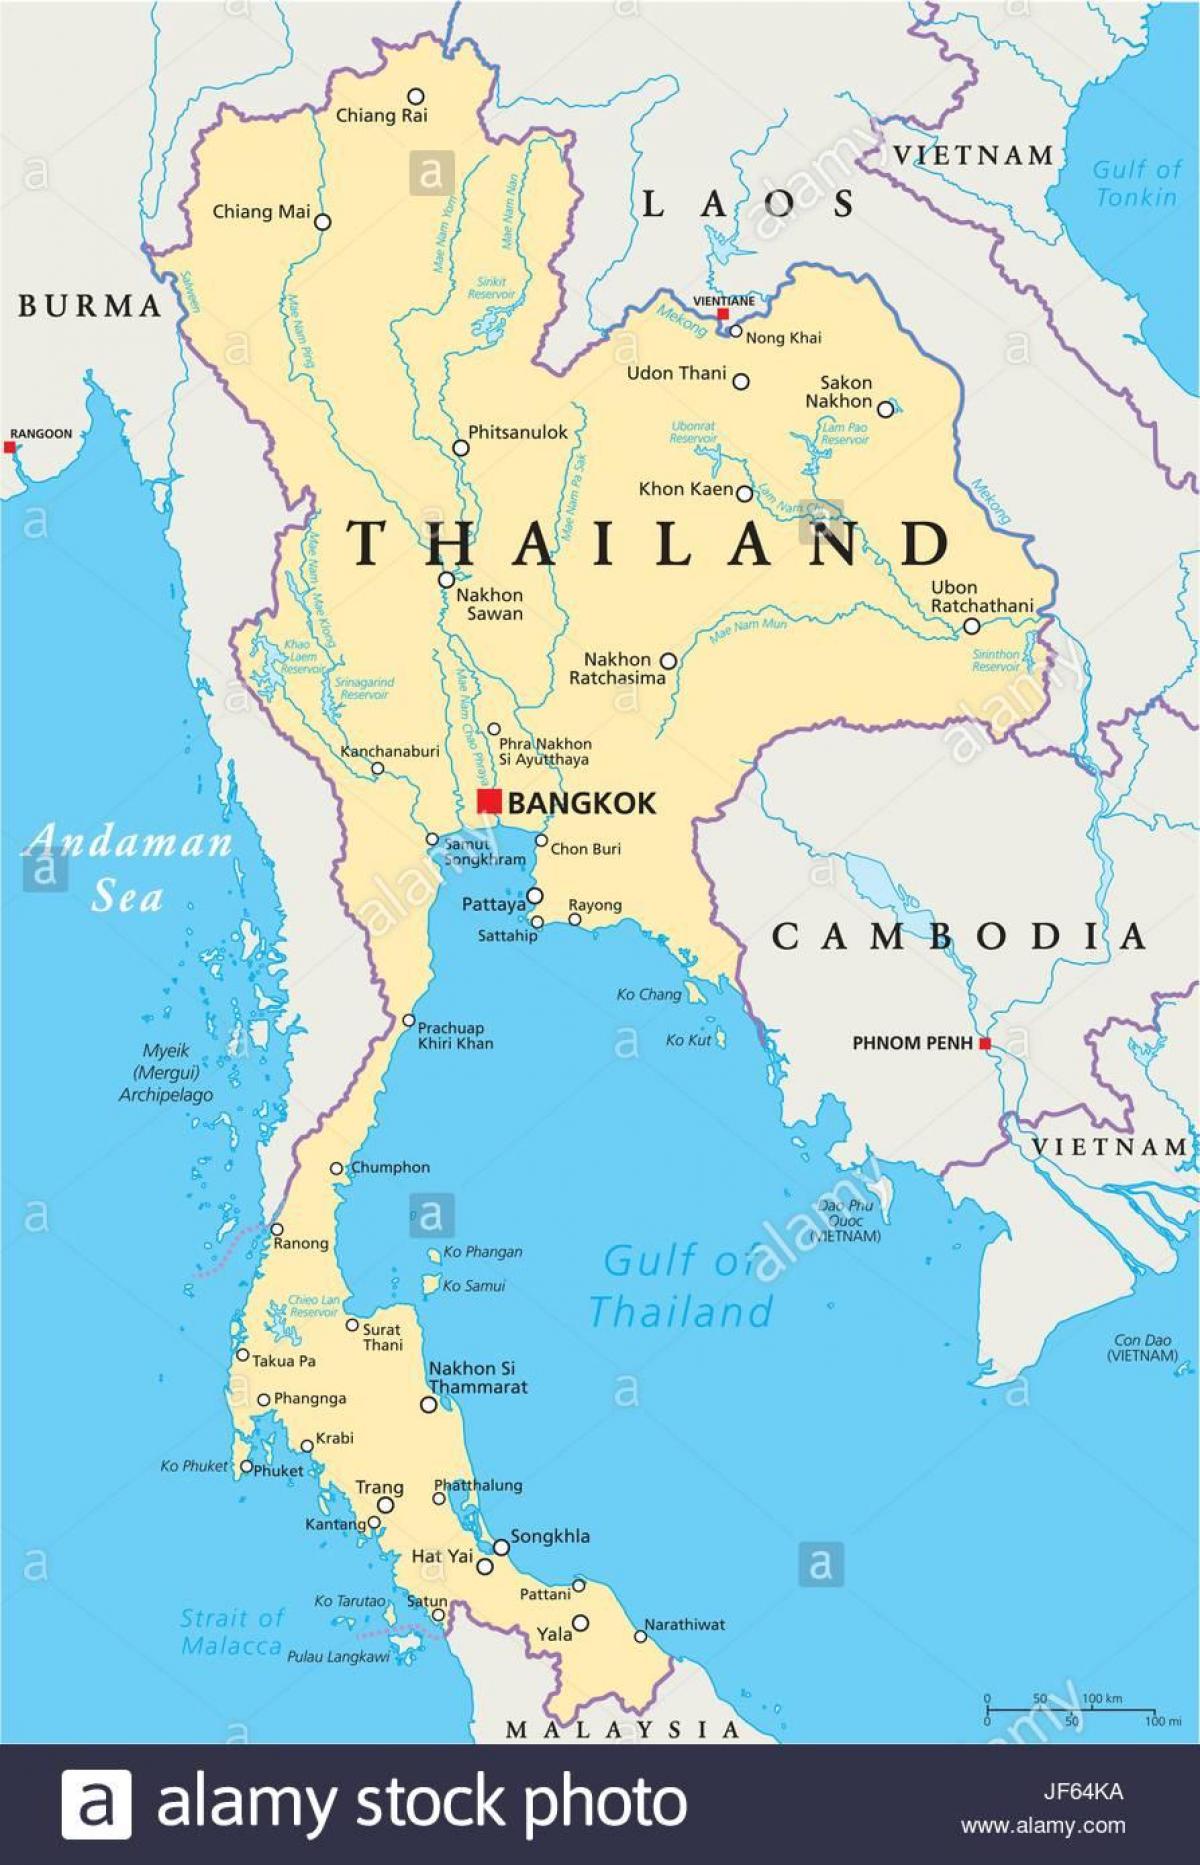 bangkok on maailman kartta